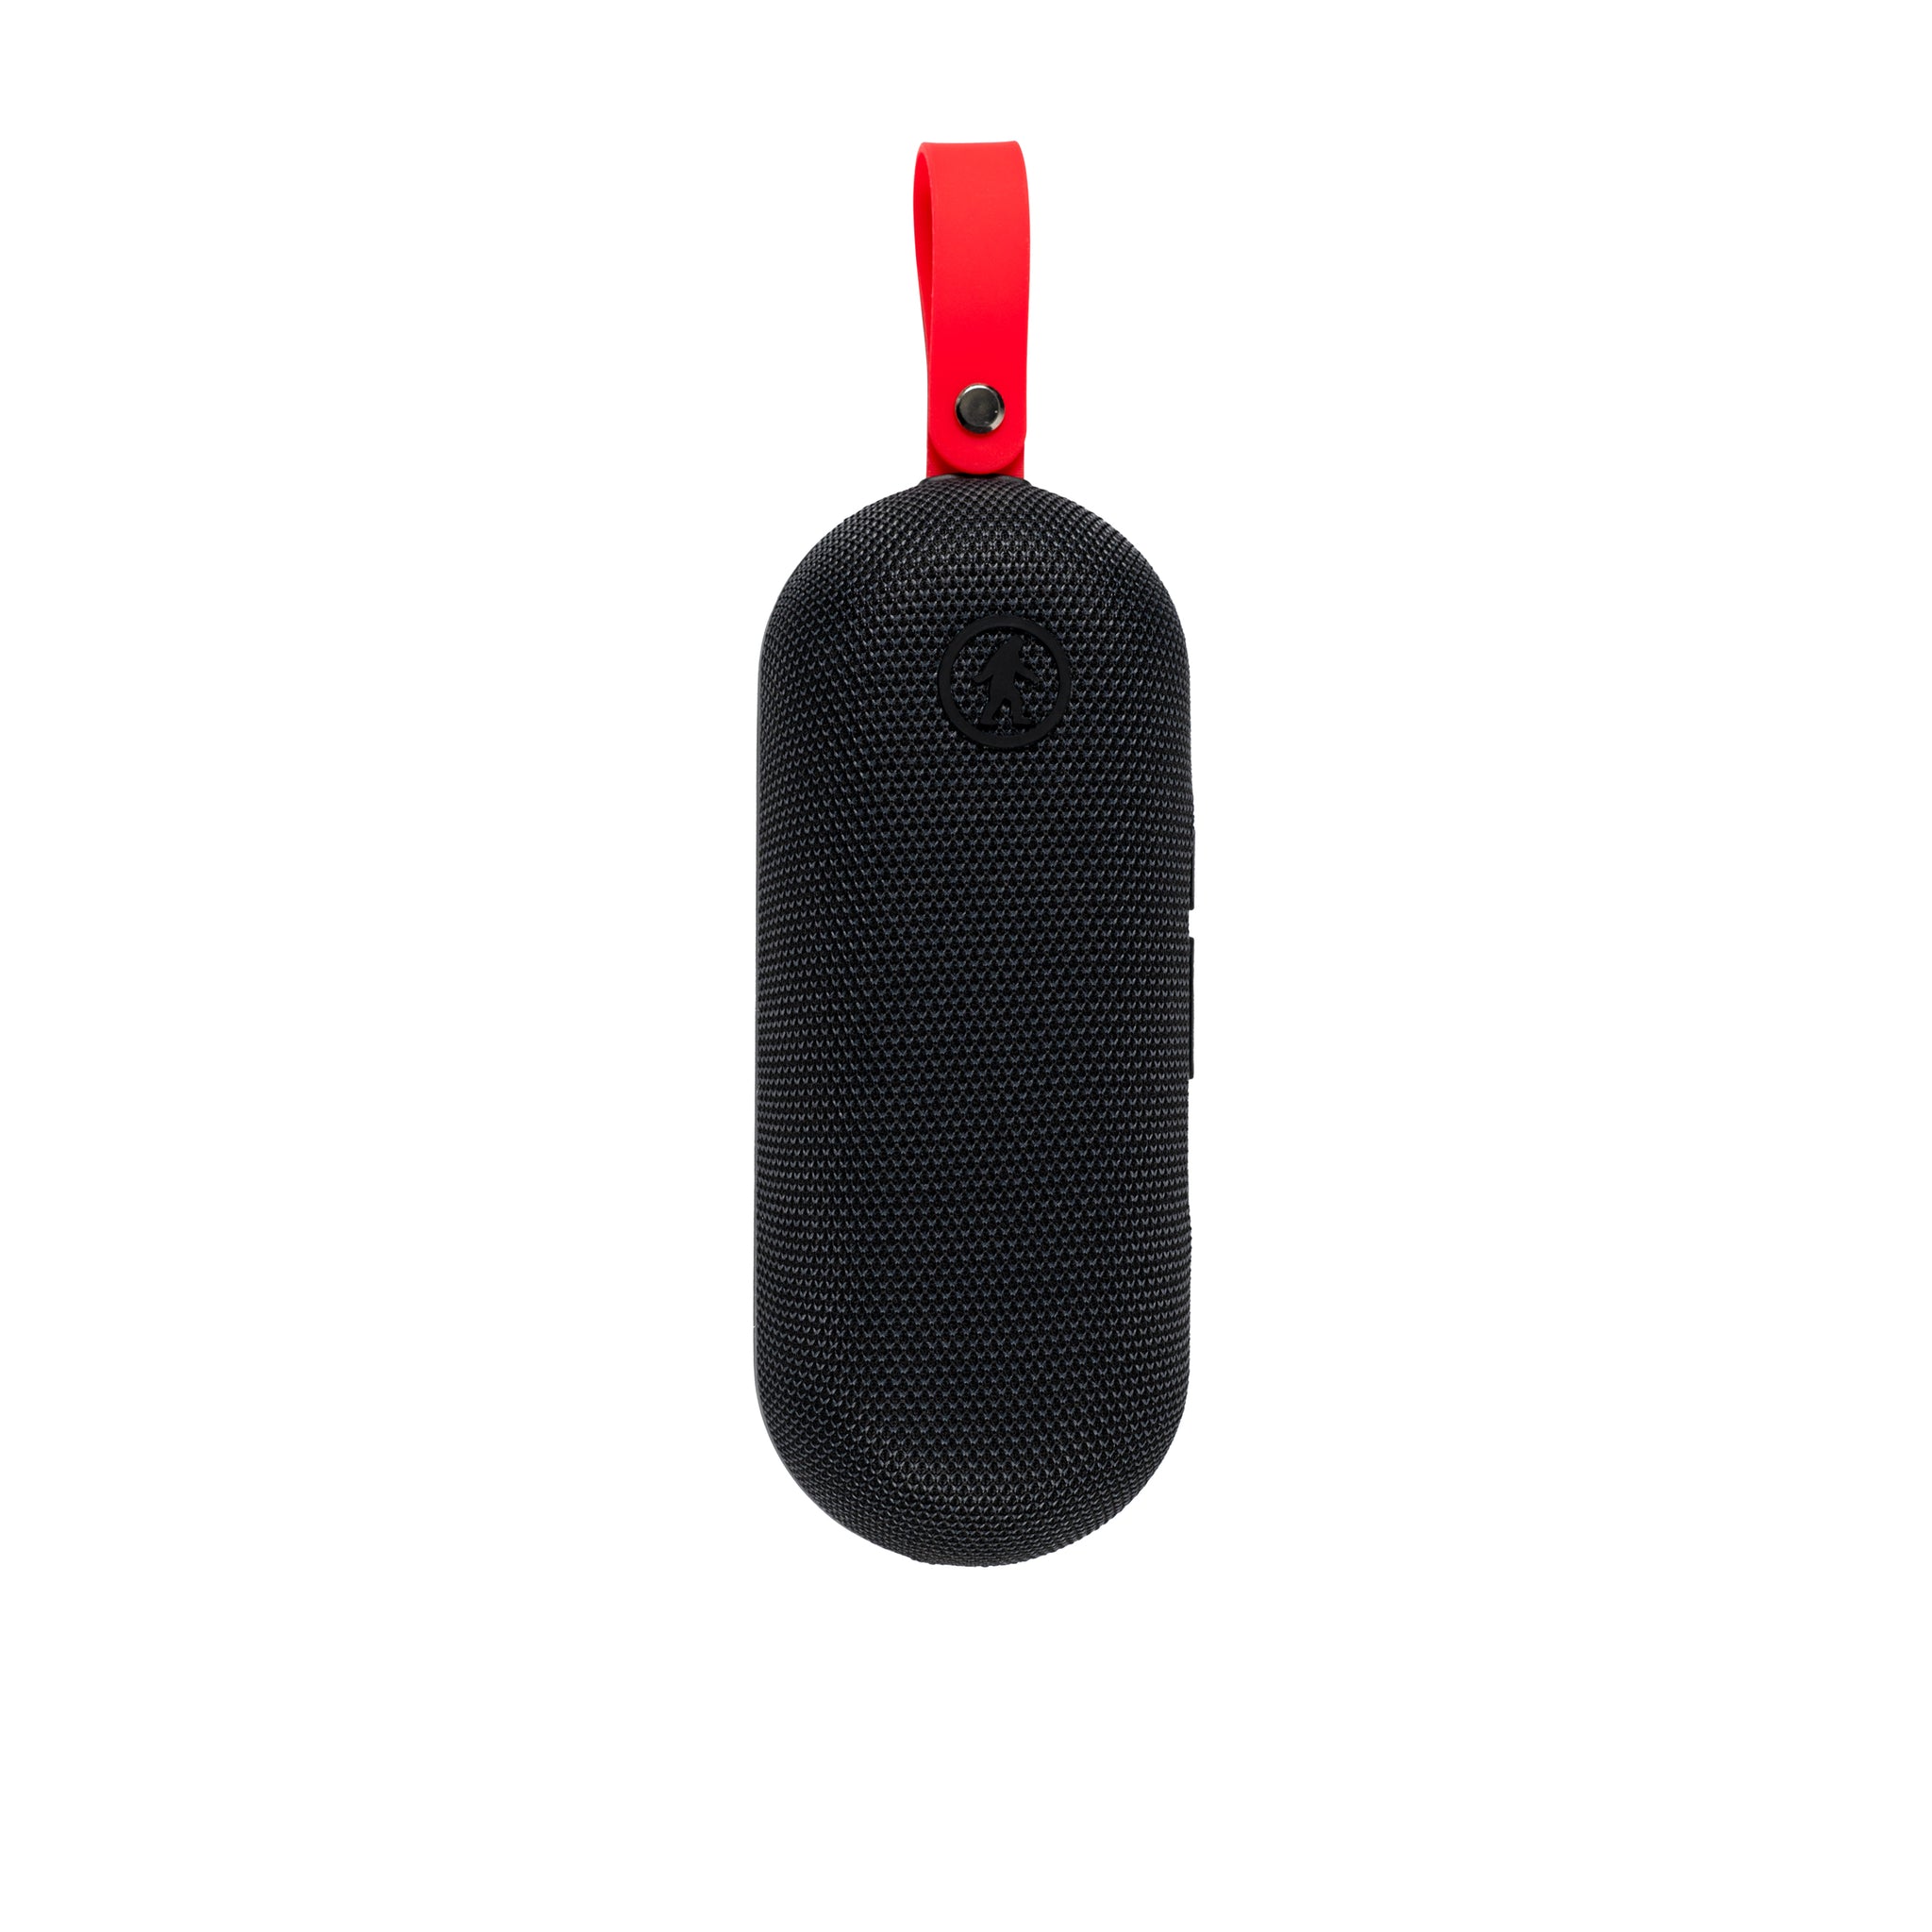 Bolt - Magnetic Water Resistant Bluetooth Speaker